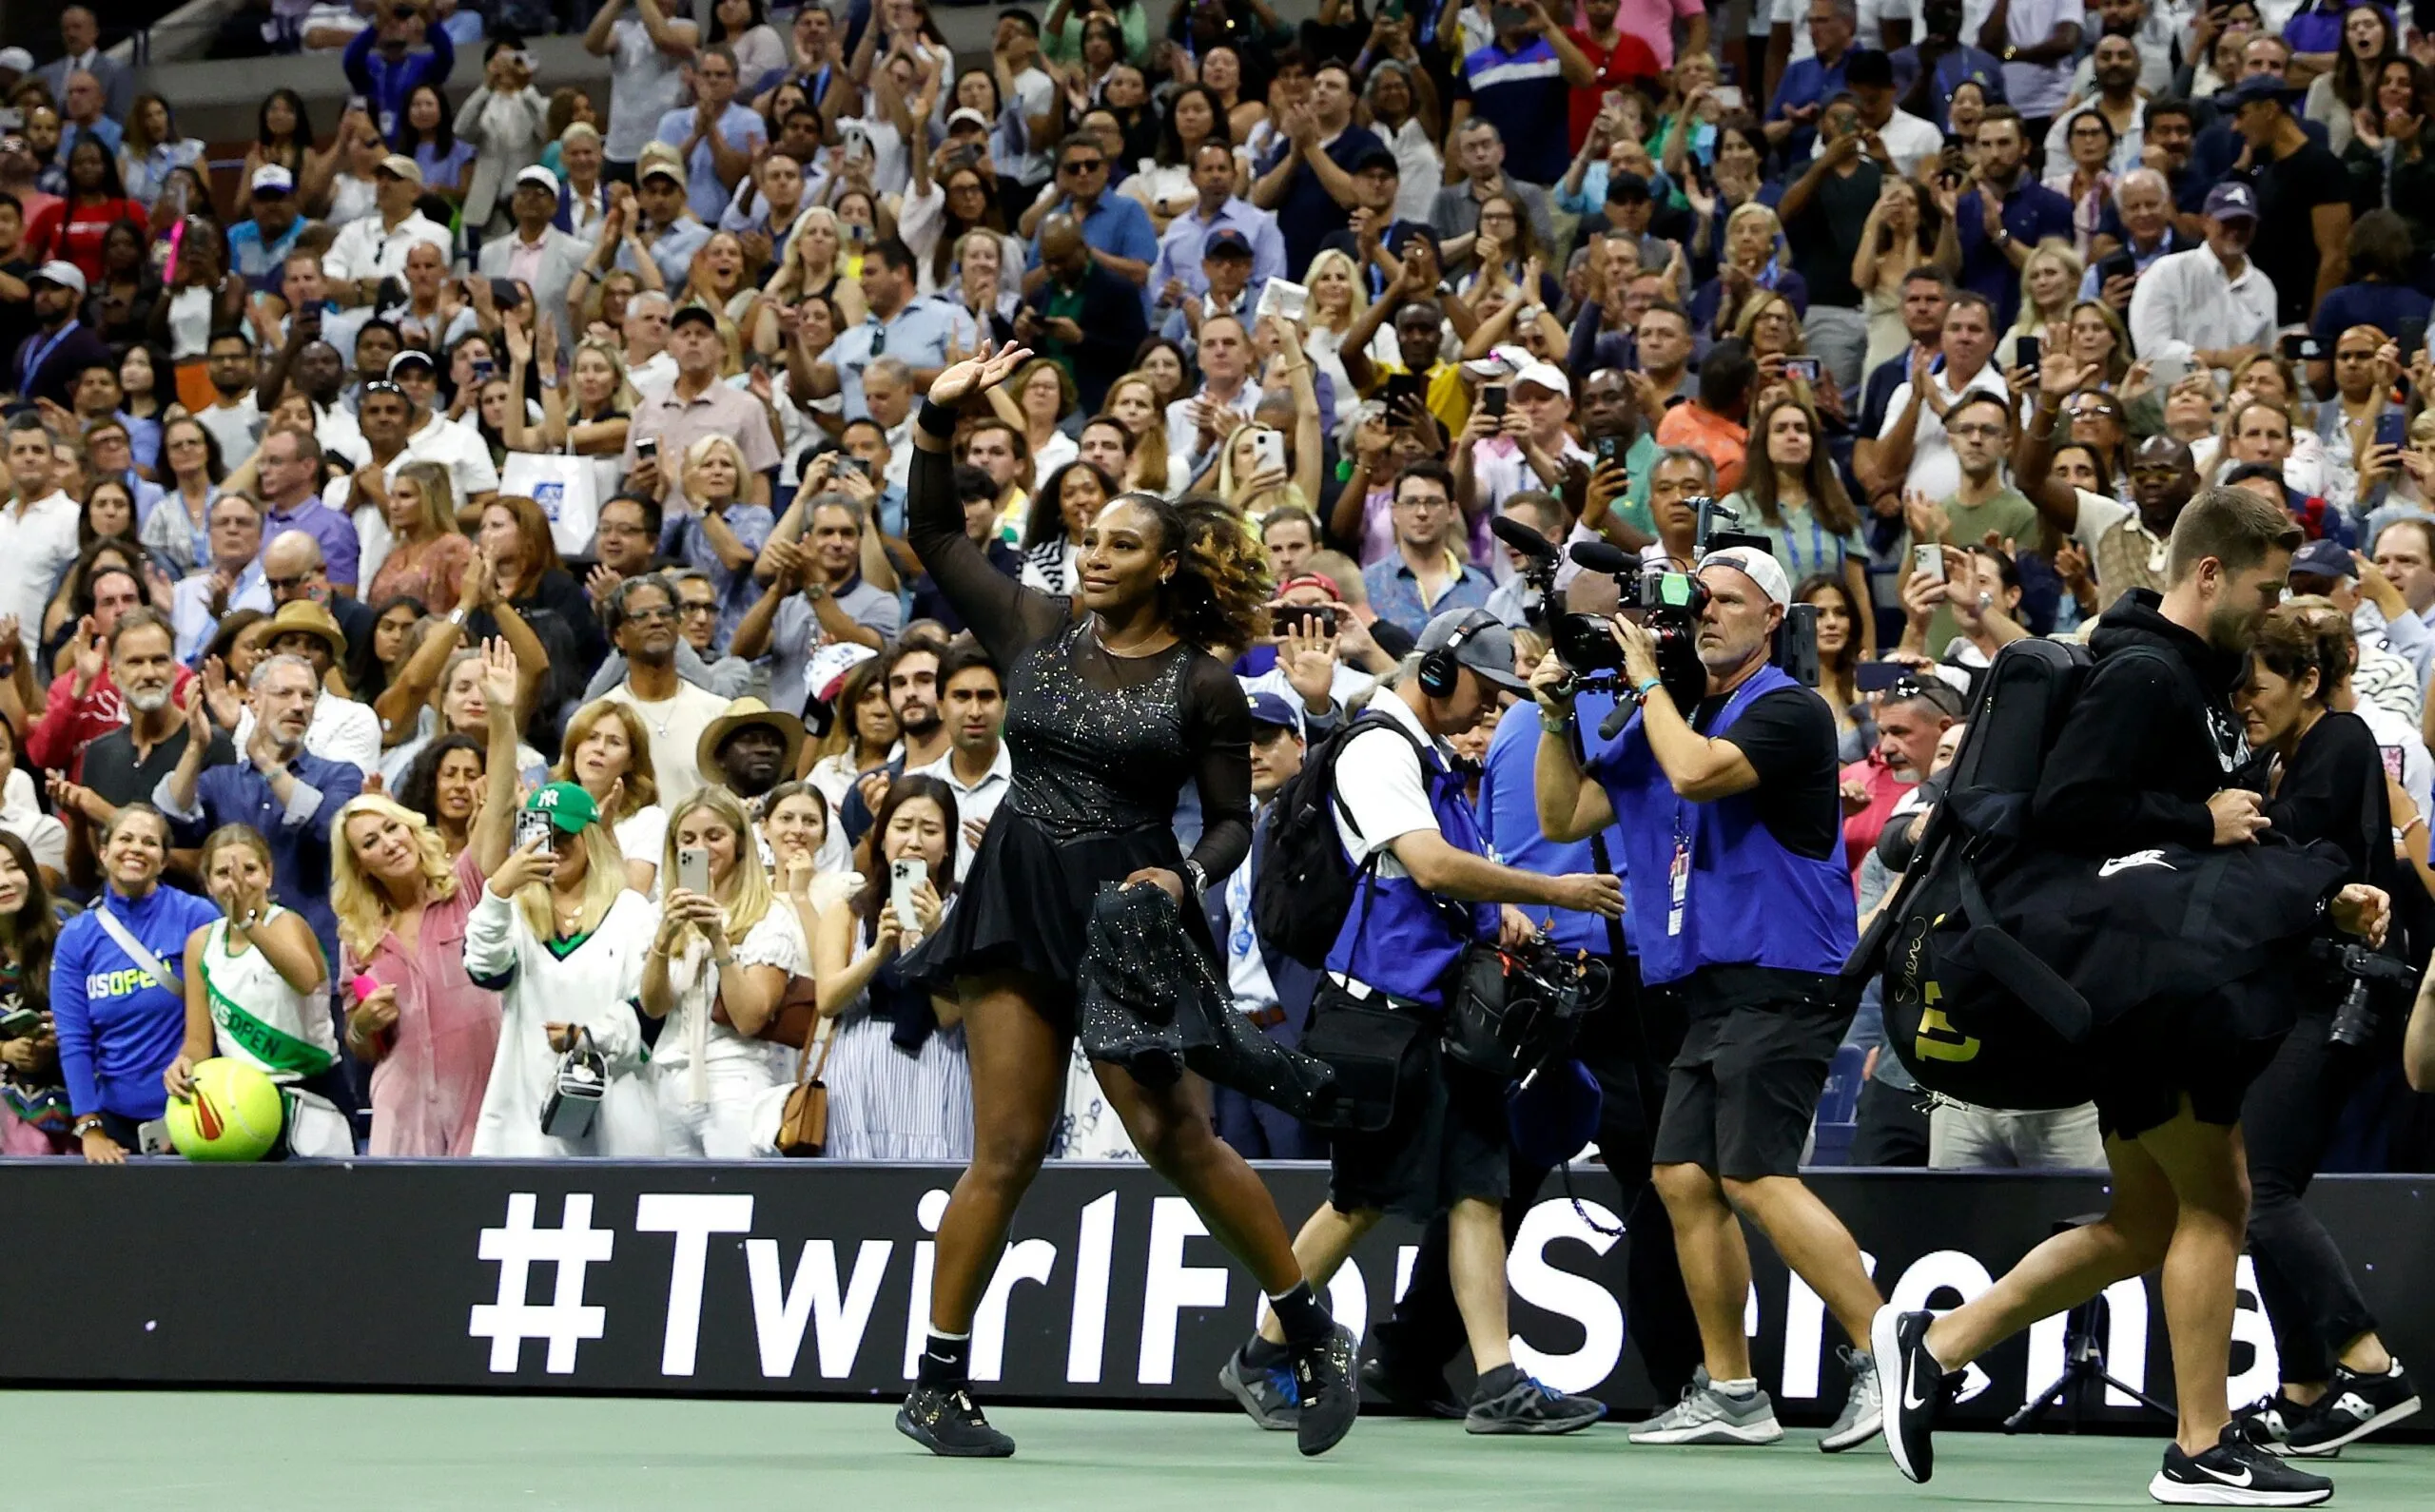 Serena Williams se retira del tenis